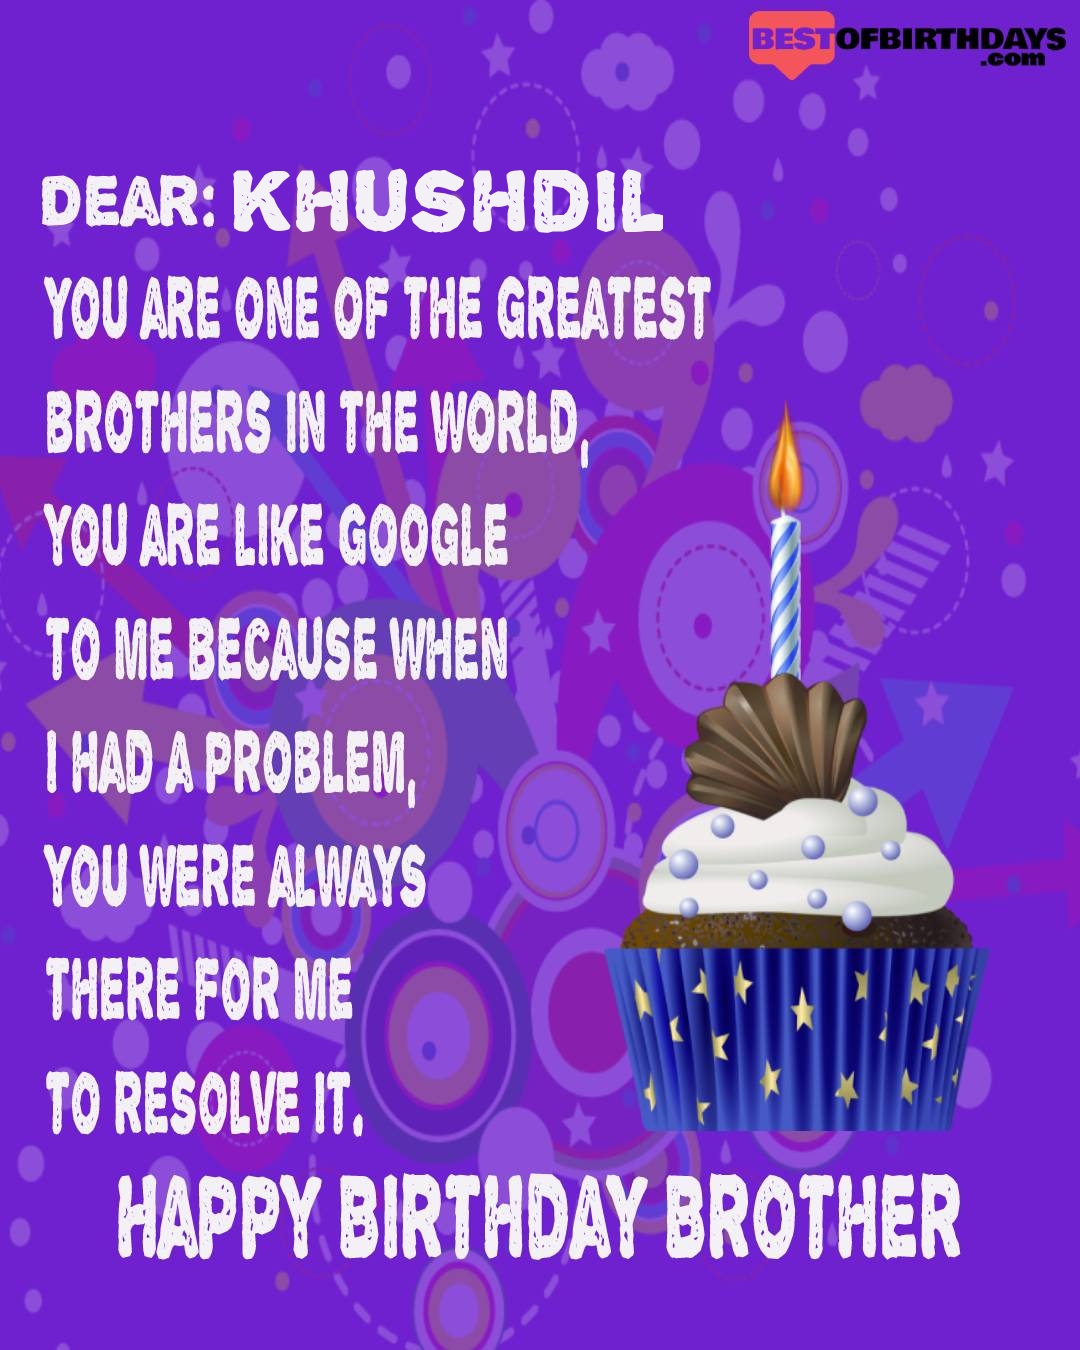 Happy birthday khushdil bhai brother bro